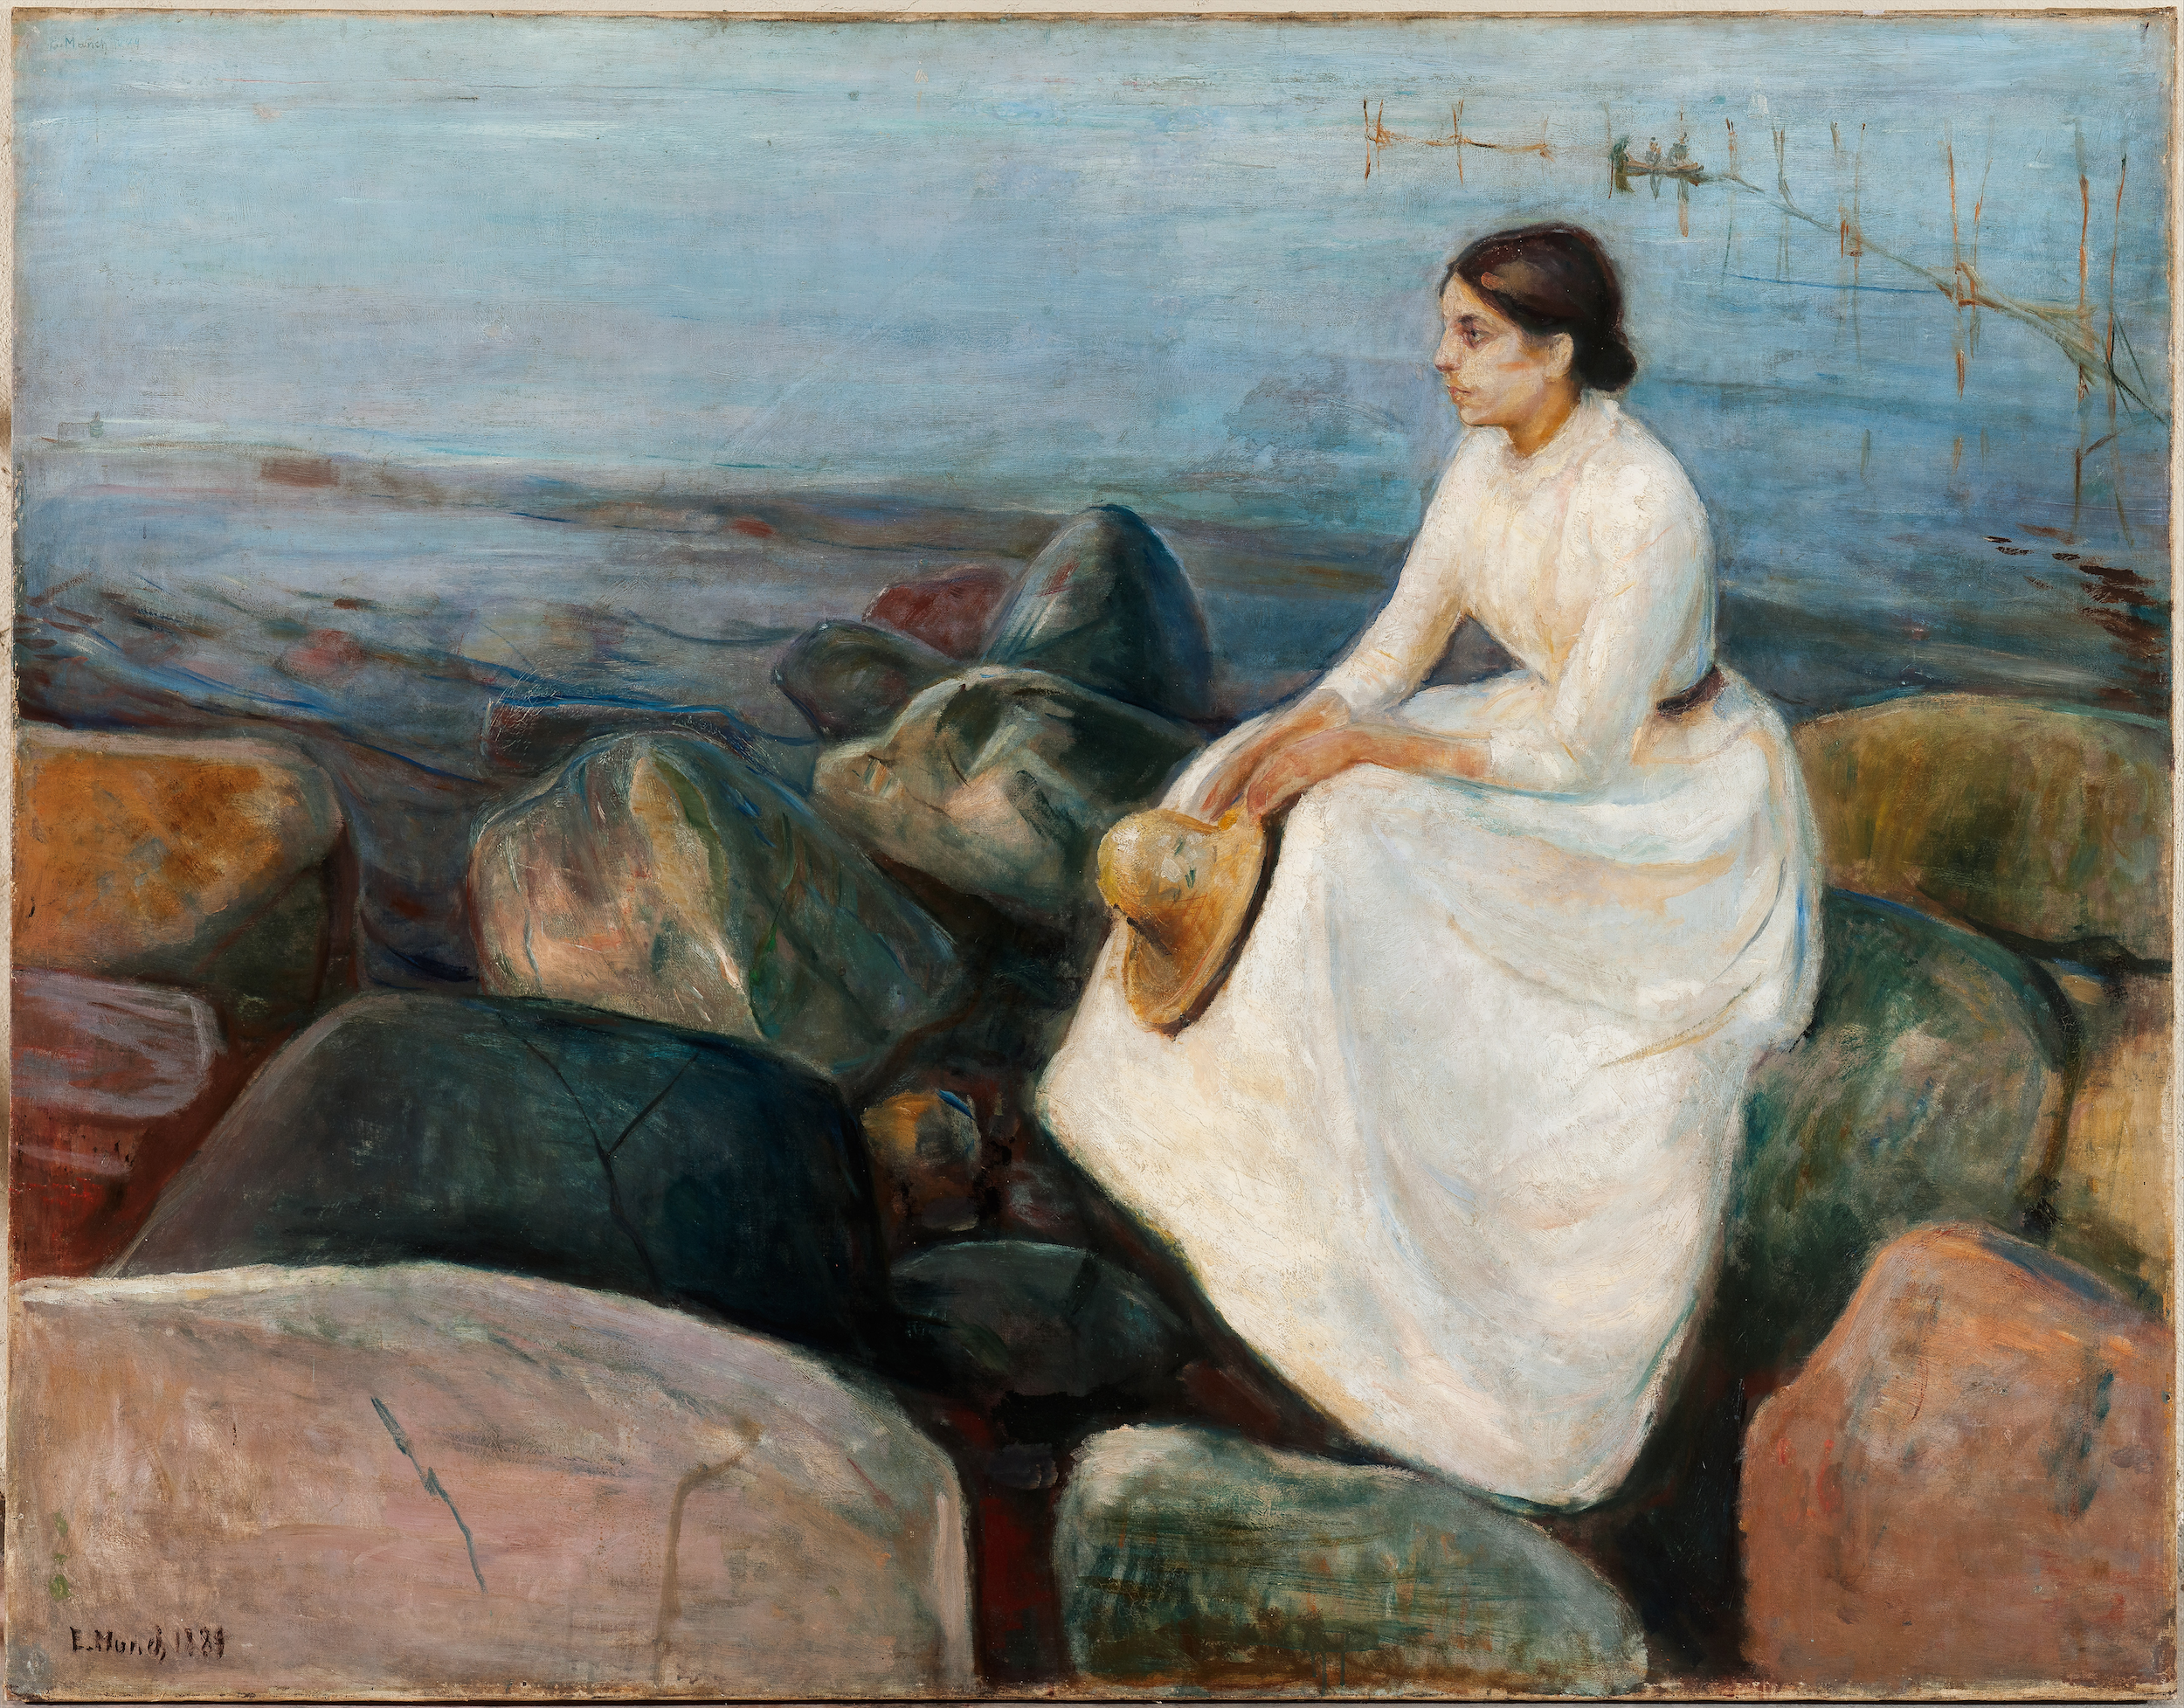 Summer Night, Inger on the Beach by Edvard Munch - 1889 - 126.5 x 161.5 cm Europeana